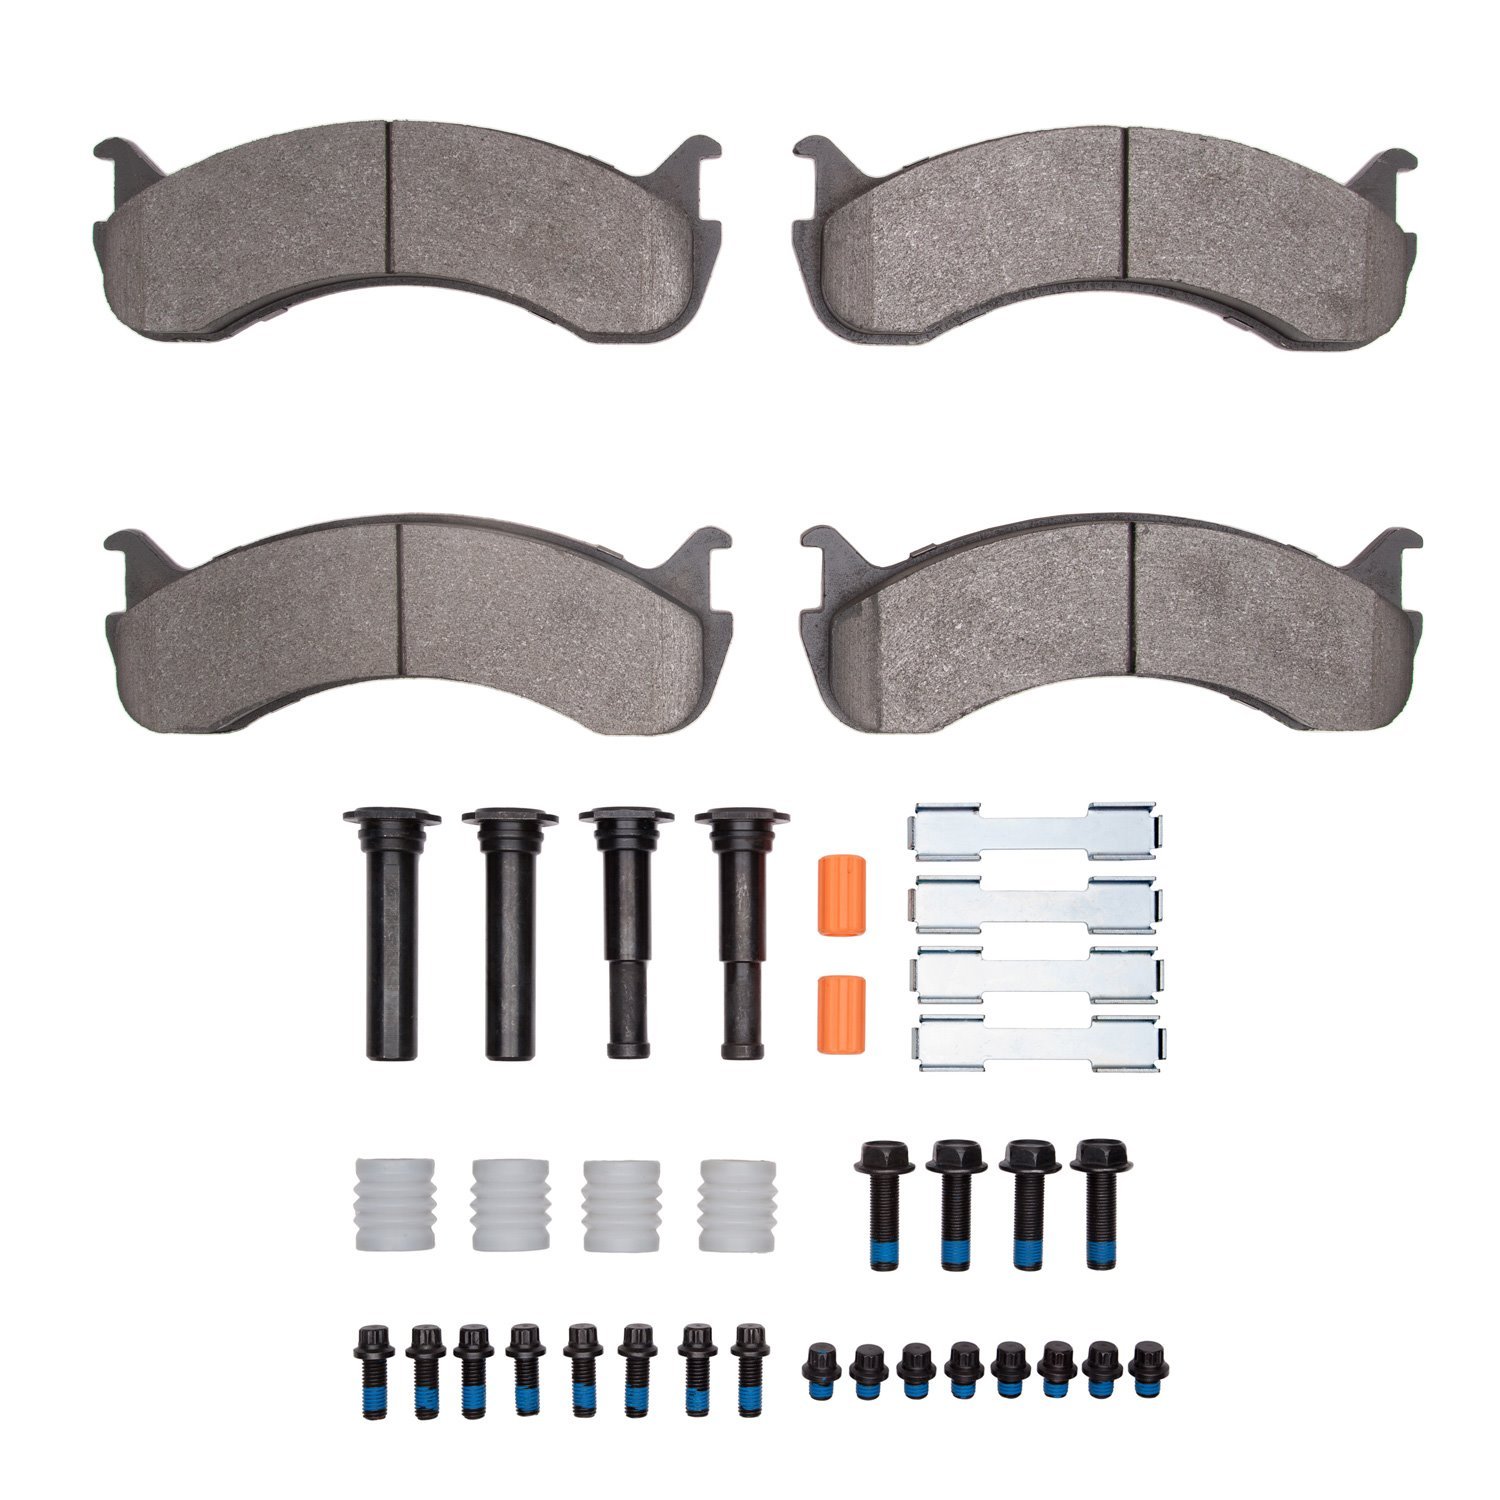 Super-Duty Brake Pads & Hardware Kit, Fits Select Fits Multiple Makes/Models, Position: Front & Rear